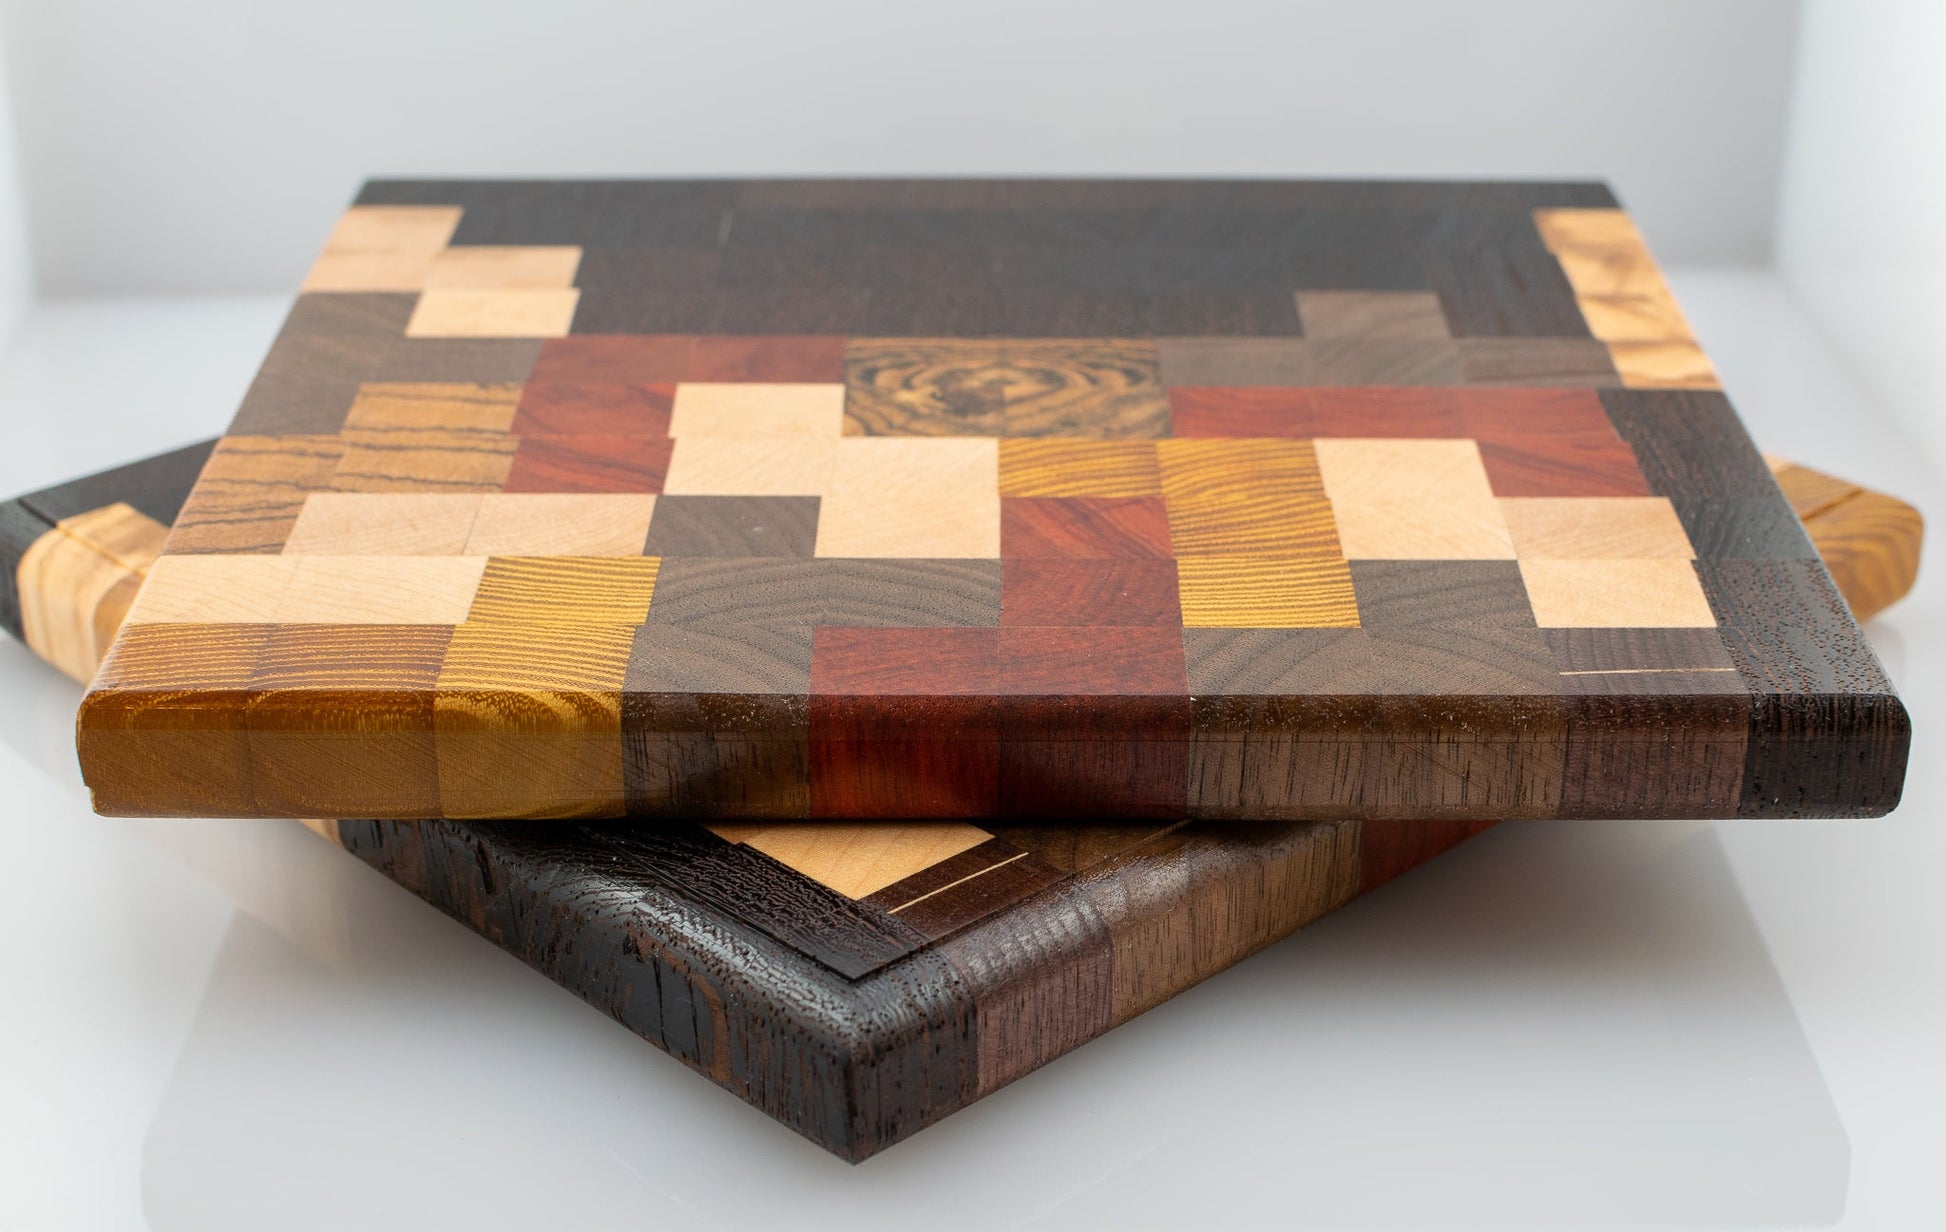 handmade wood trivet inspired by the Tetris video game